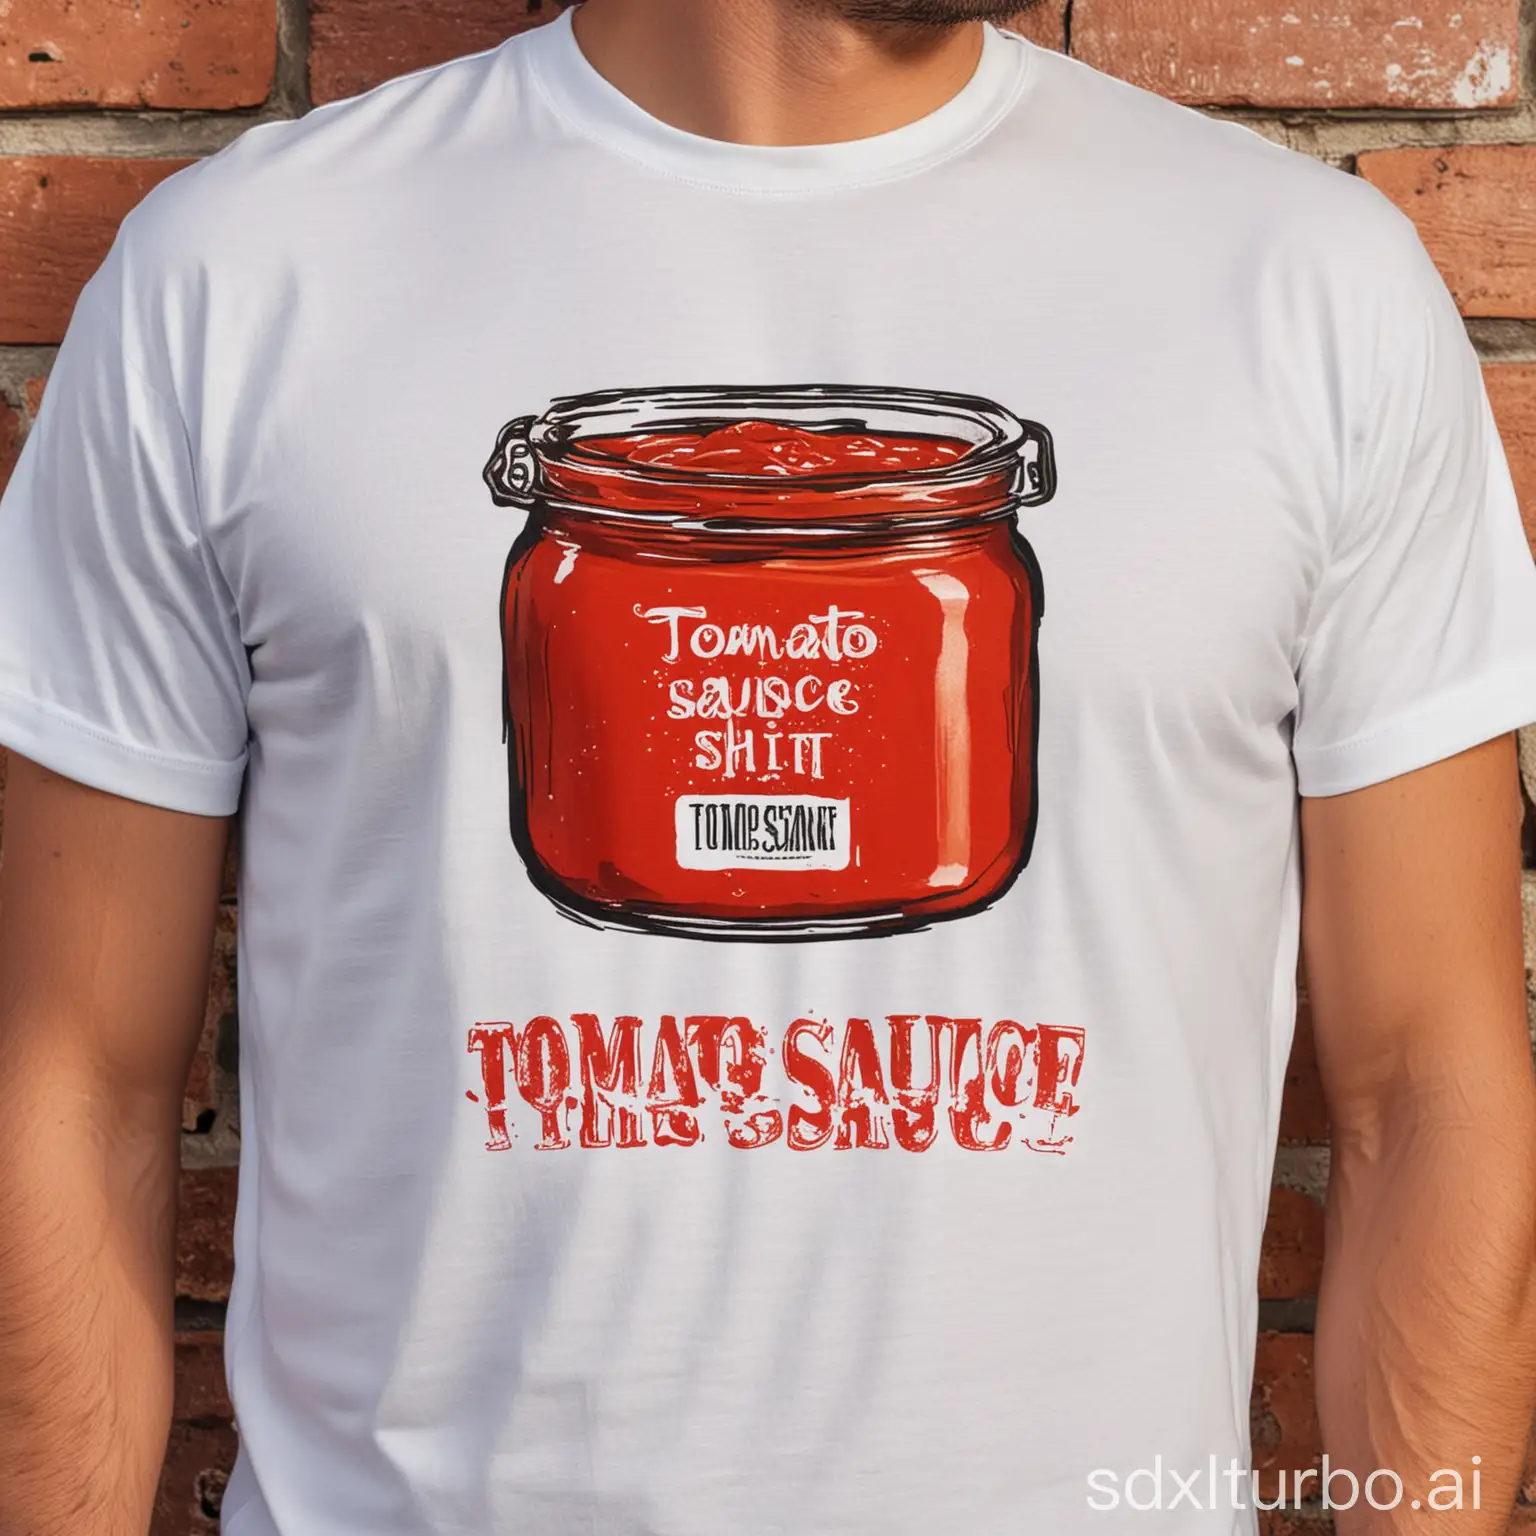 Tomato sauce on the shirt